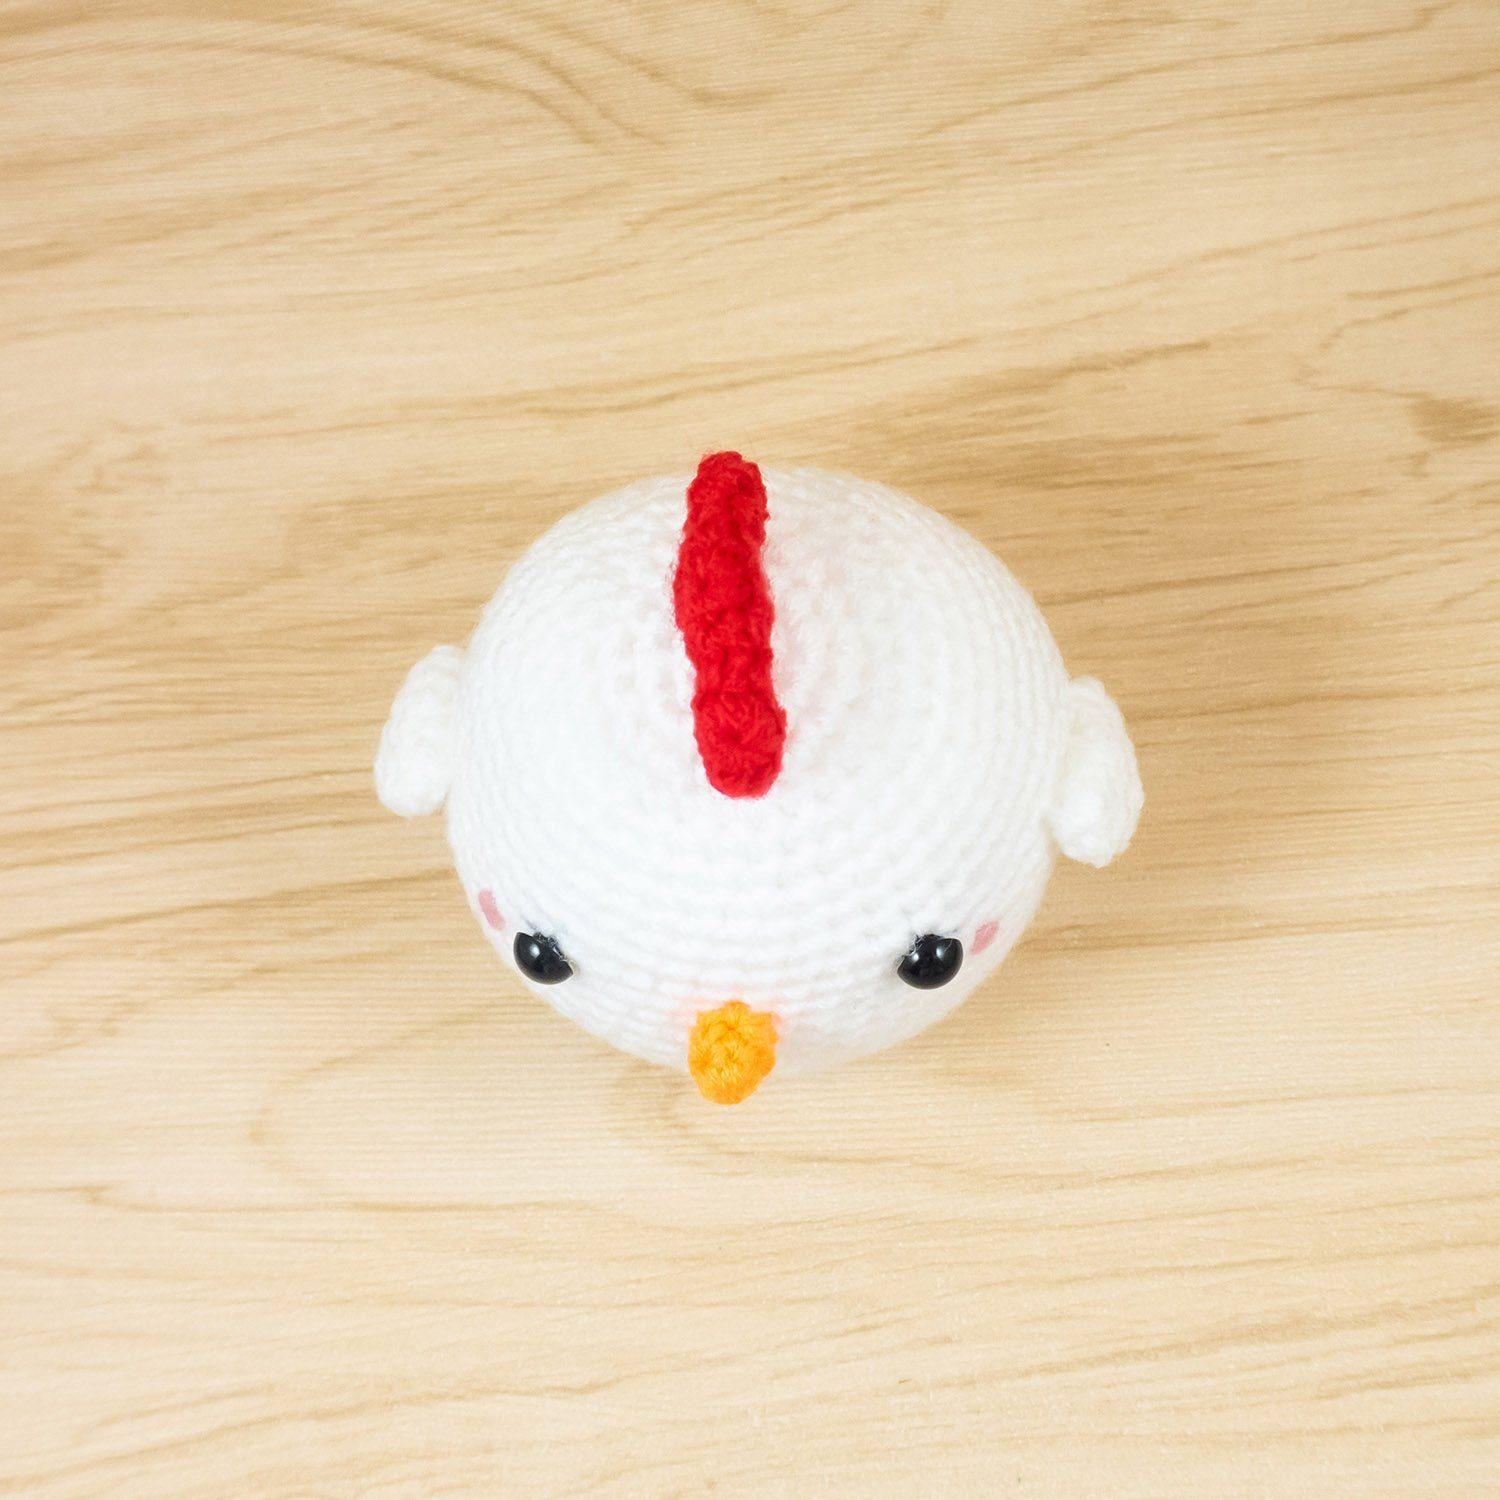 Chicken crochet pattern for gift making